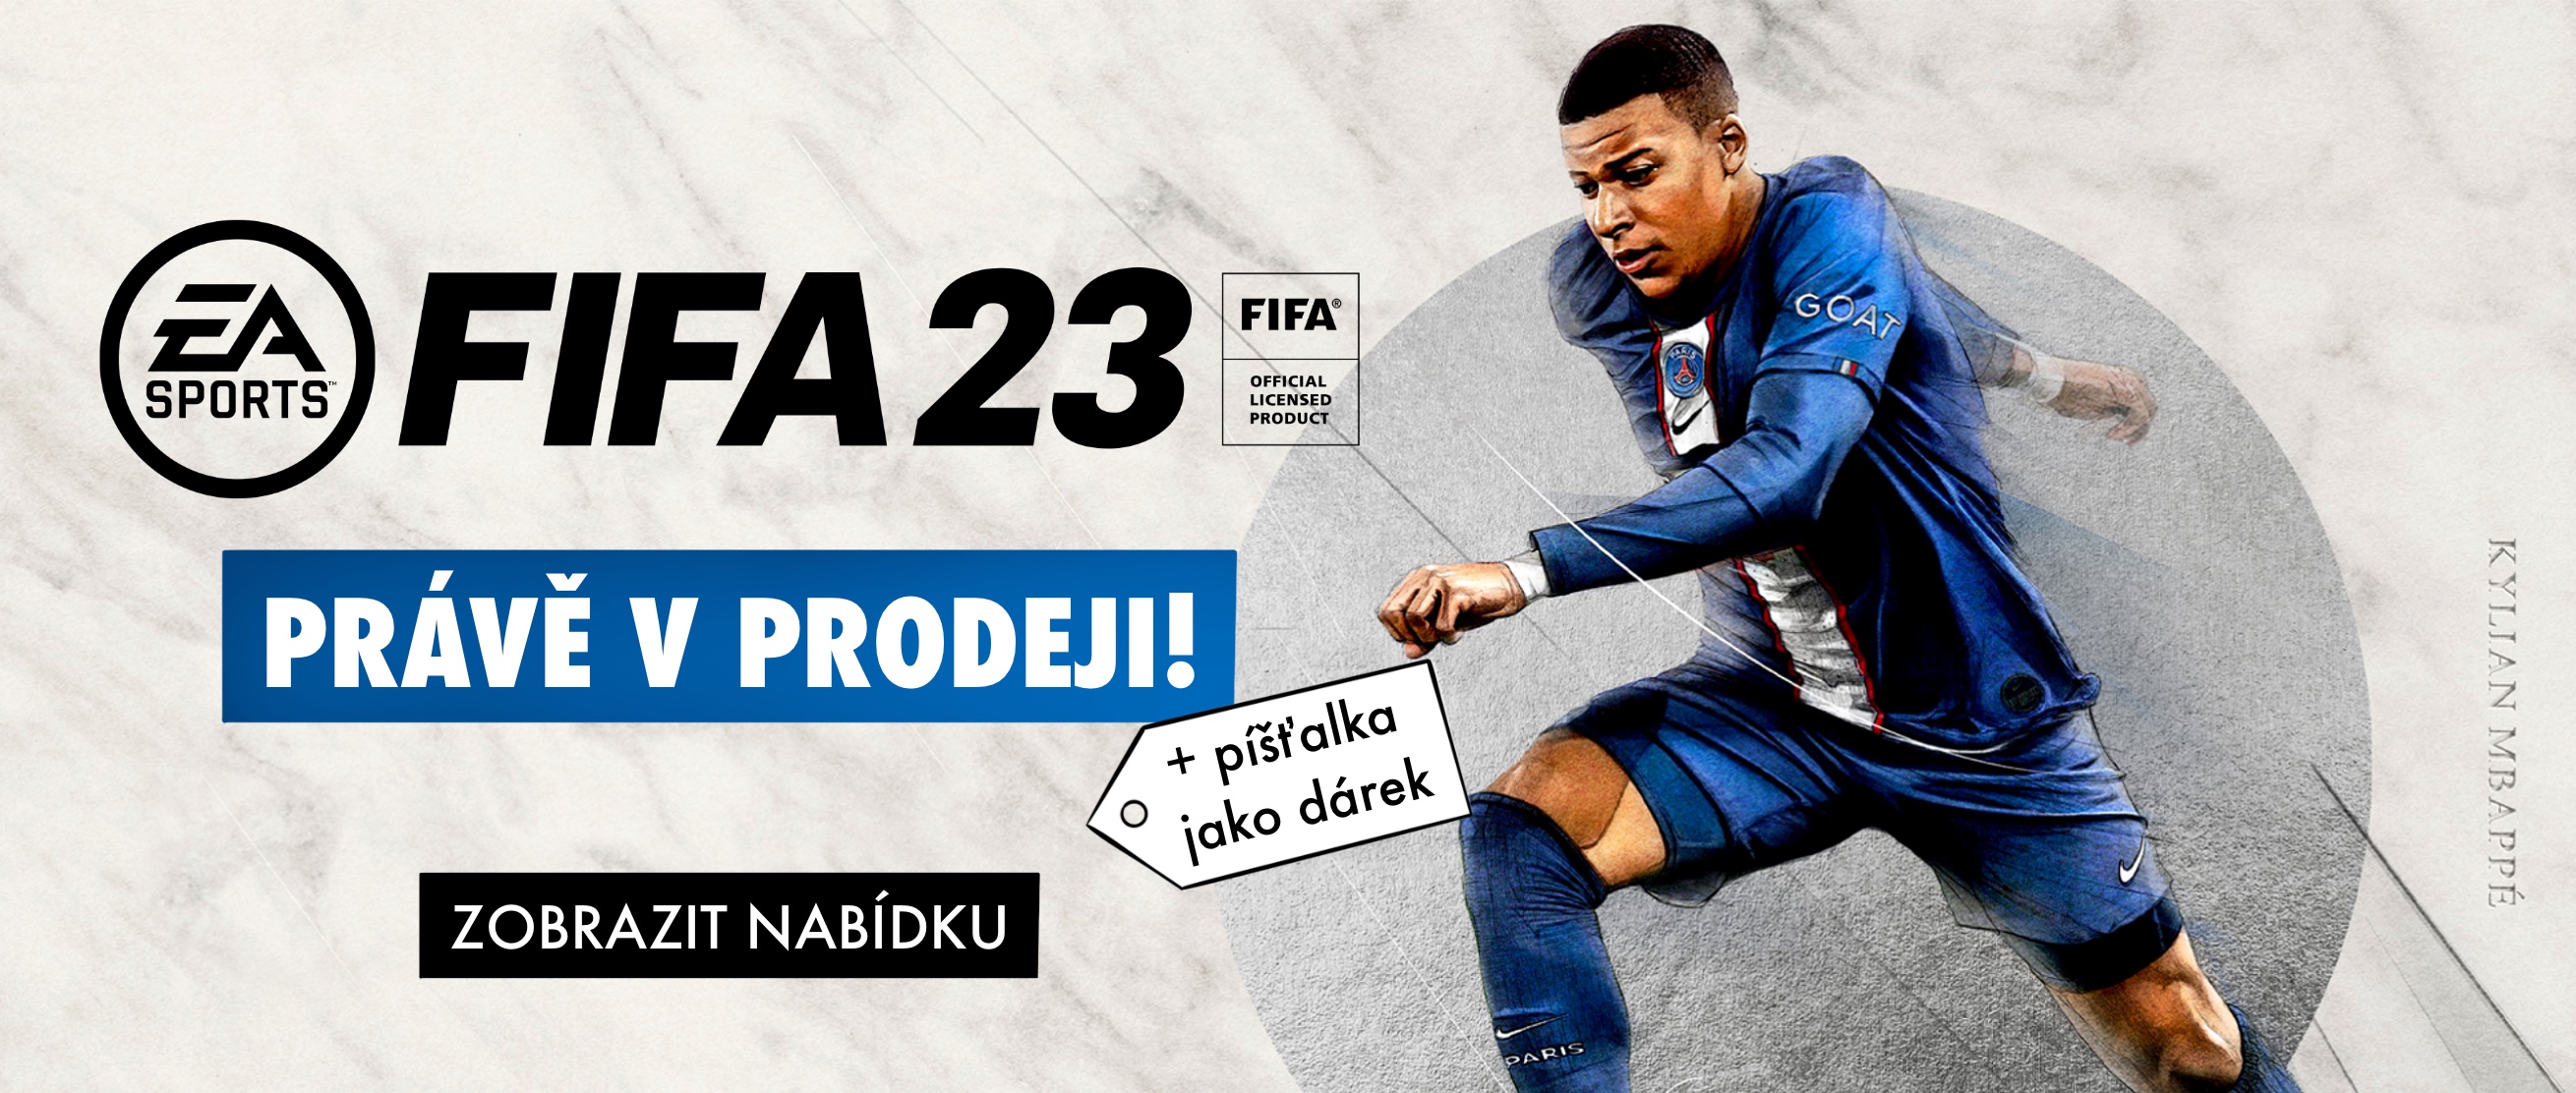 FIFA 23 - v prodeji